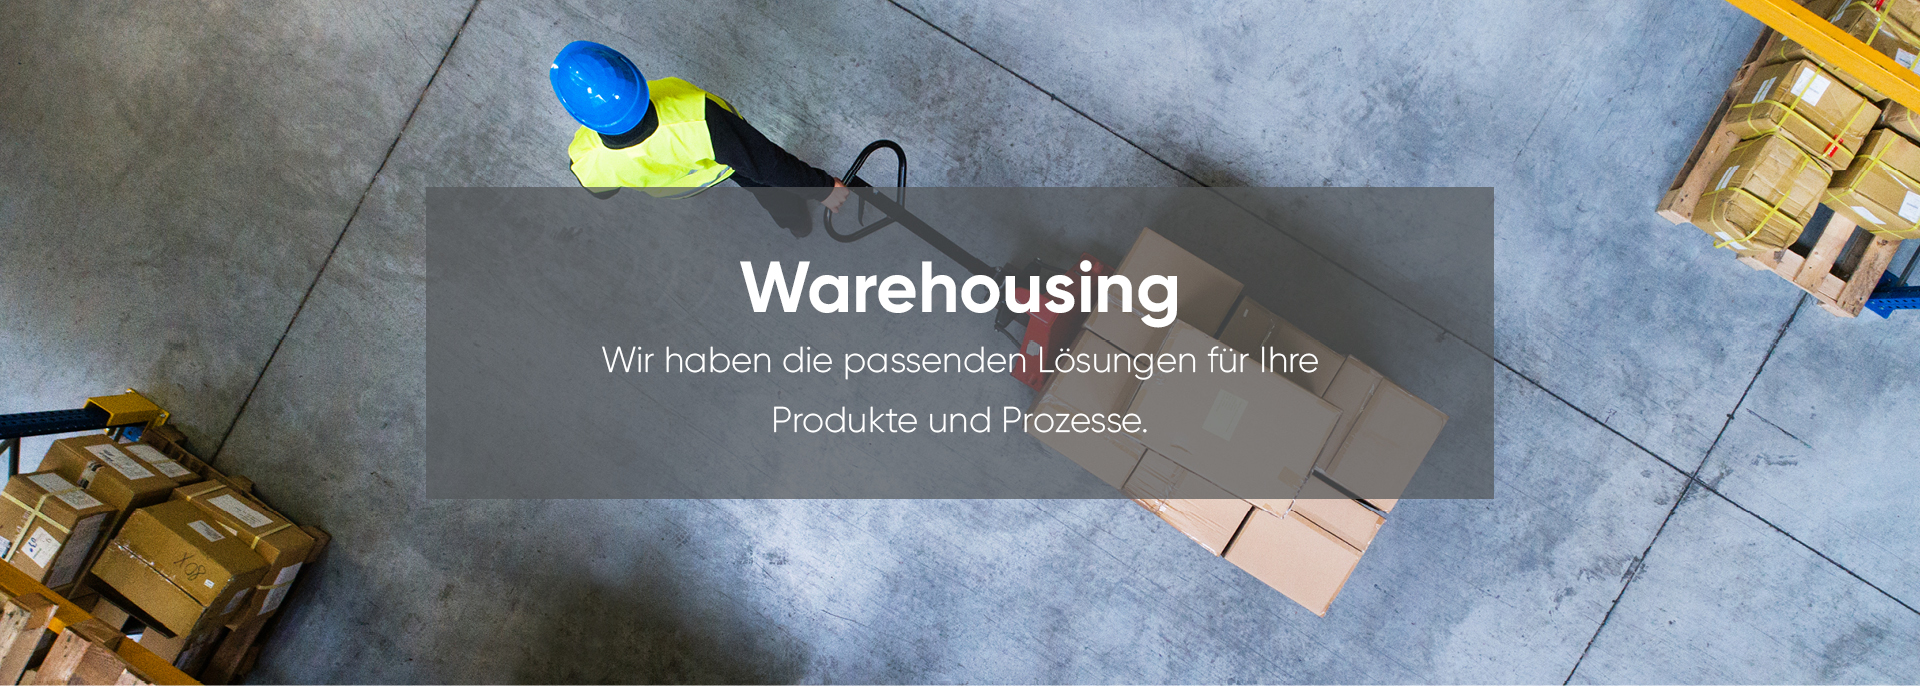 Warehousing by Deventer